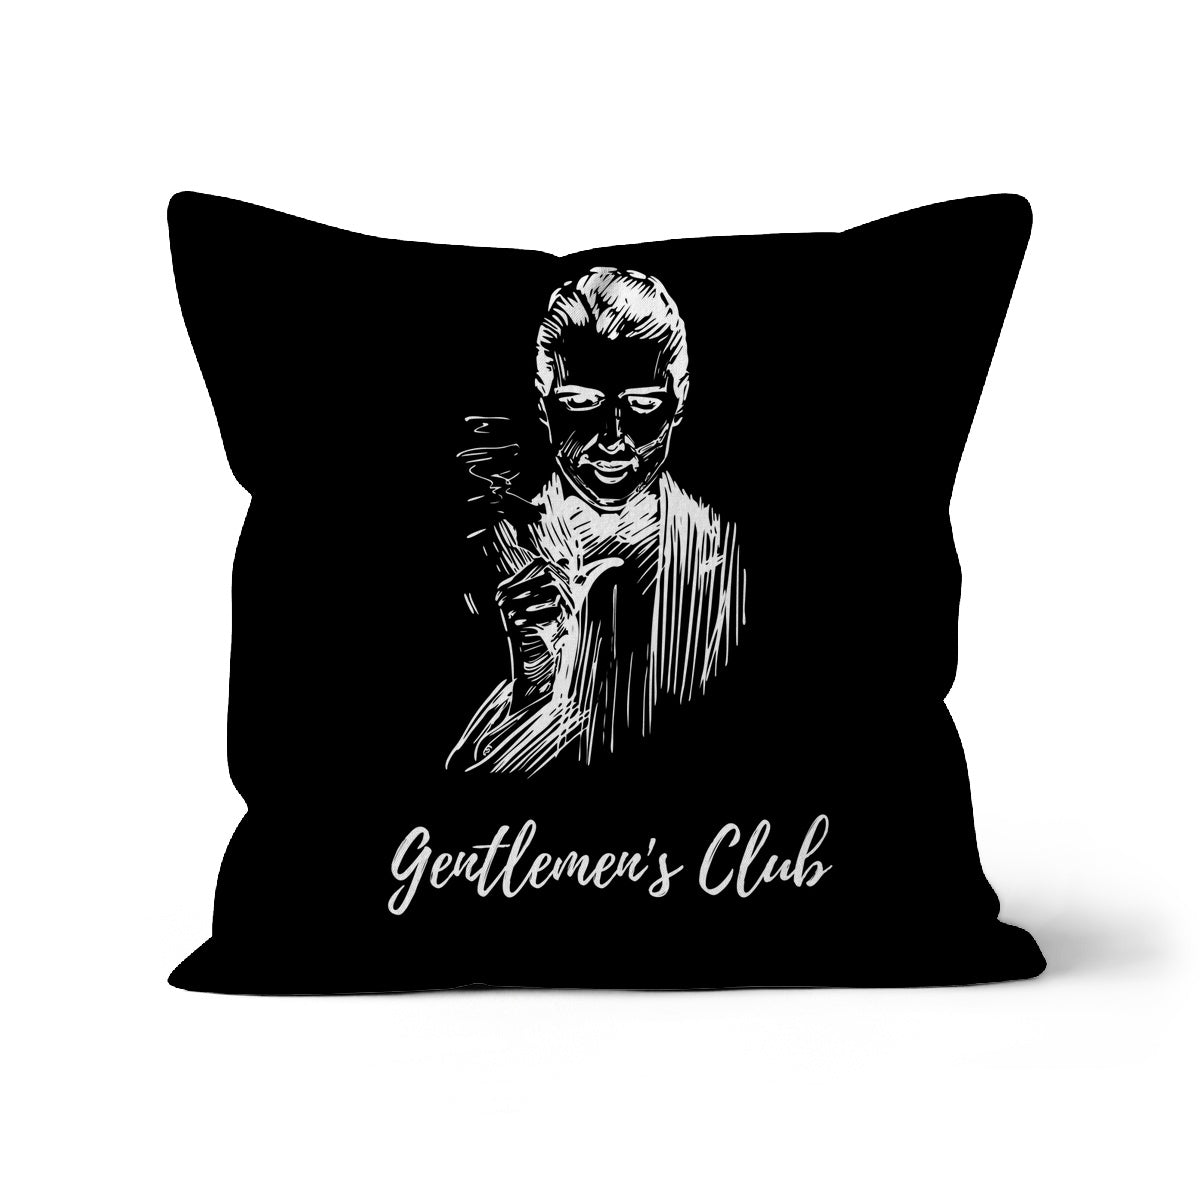 Gentlemen's Club Cushion 2